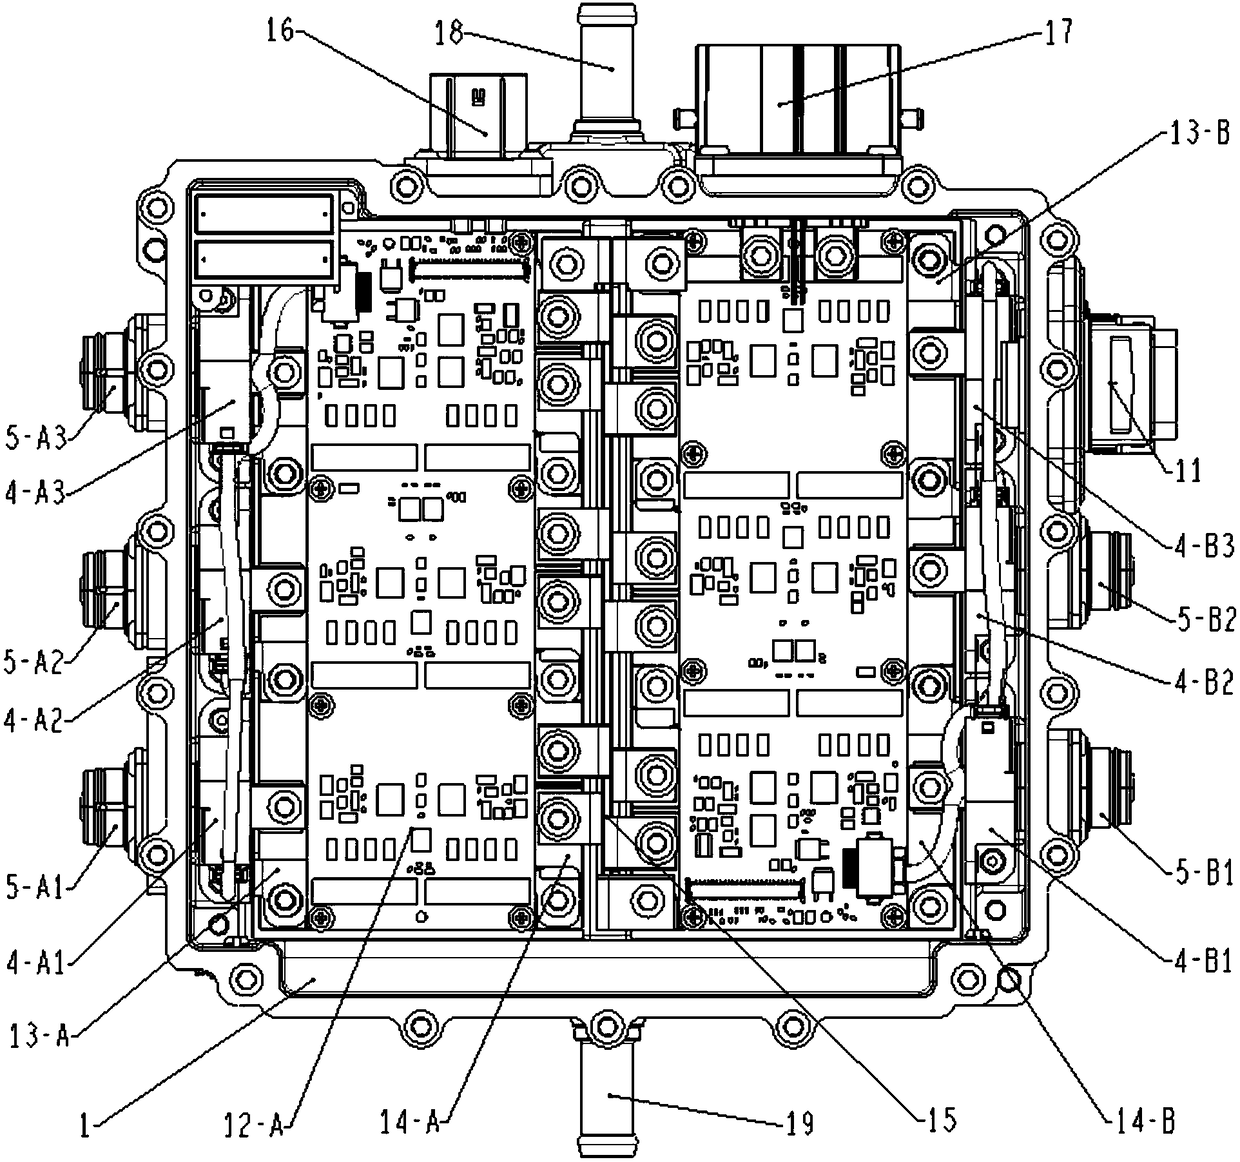 Dual-motor inverter